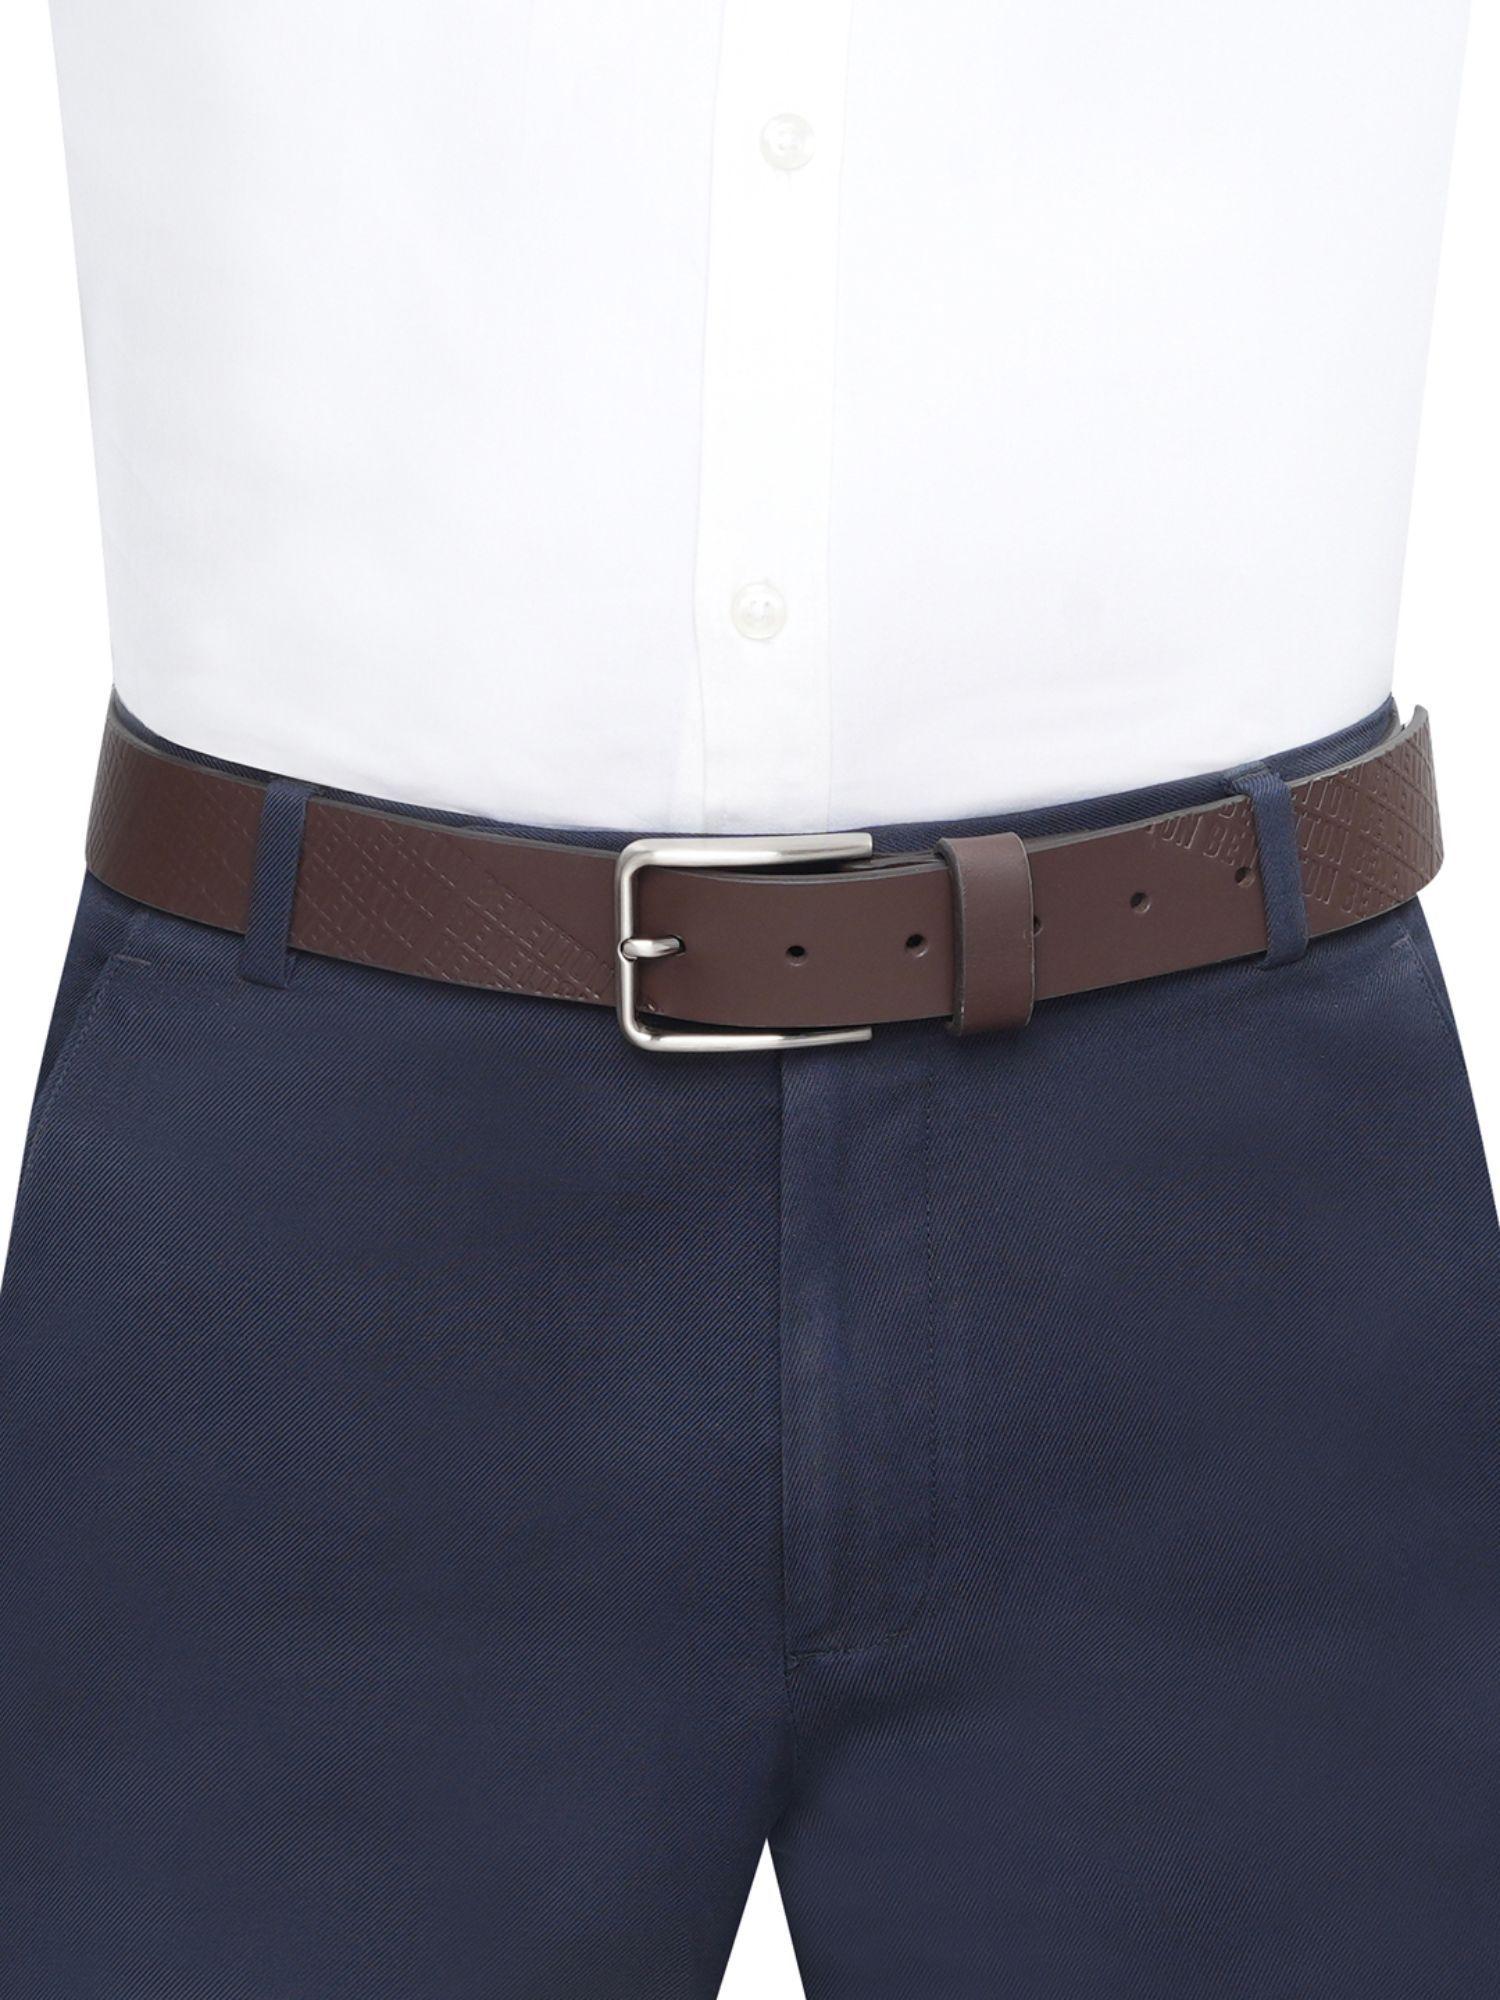 barea men leather non reversible belt - brown, s 80 cm